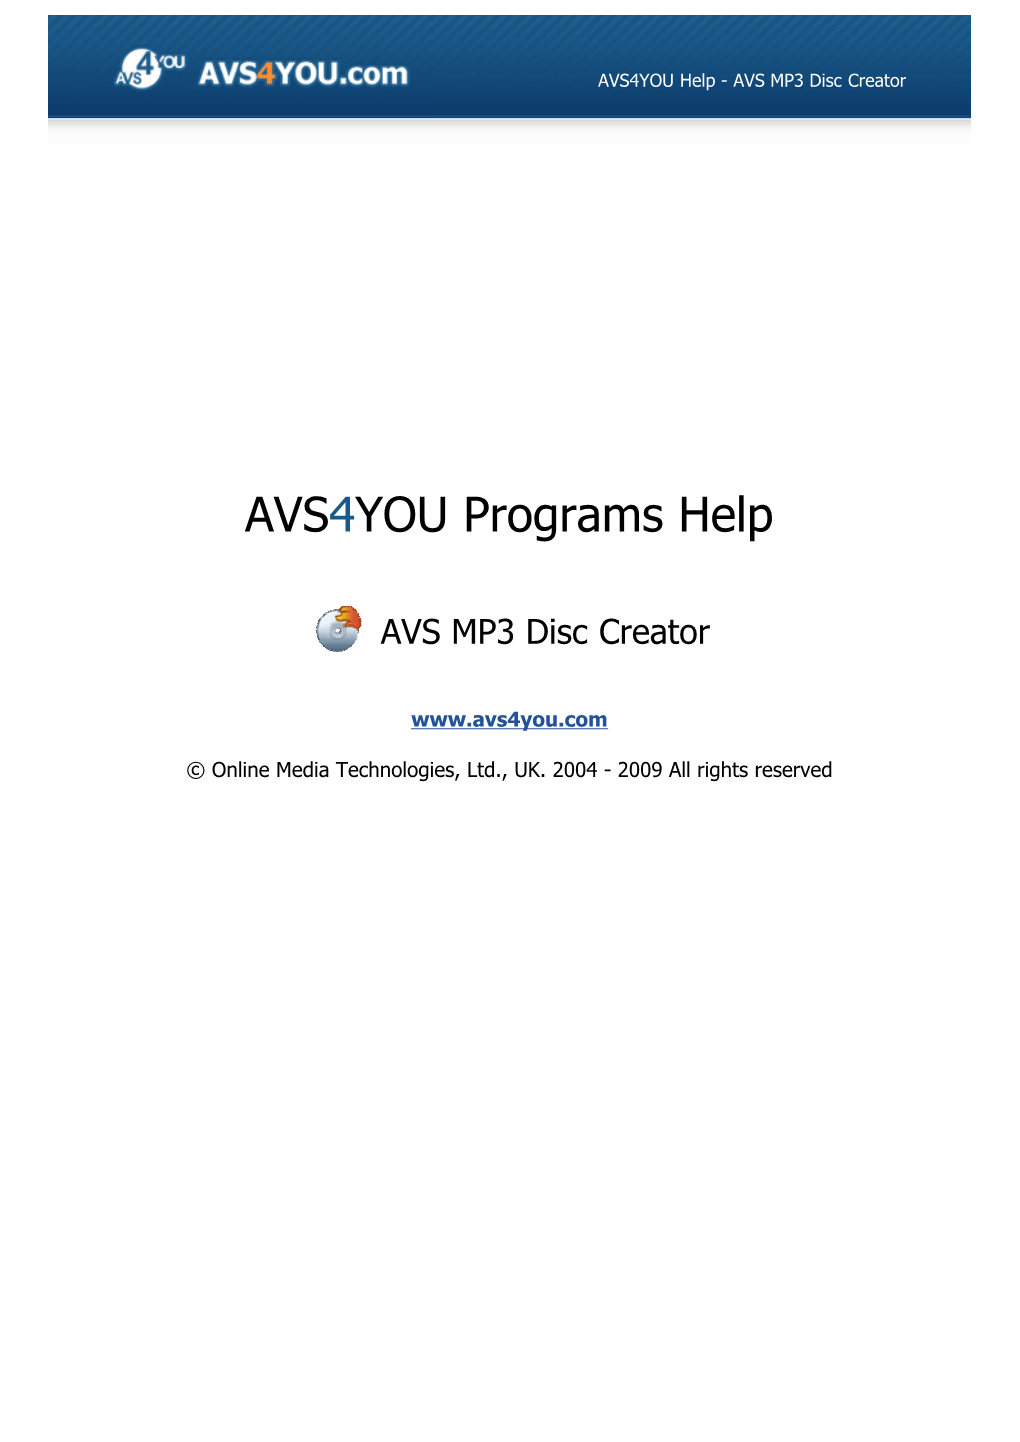 AVS4YOU Programs Help